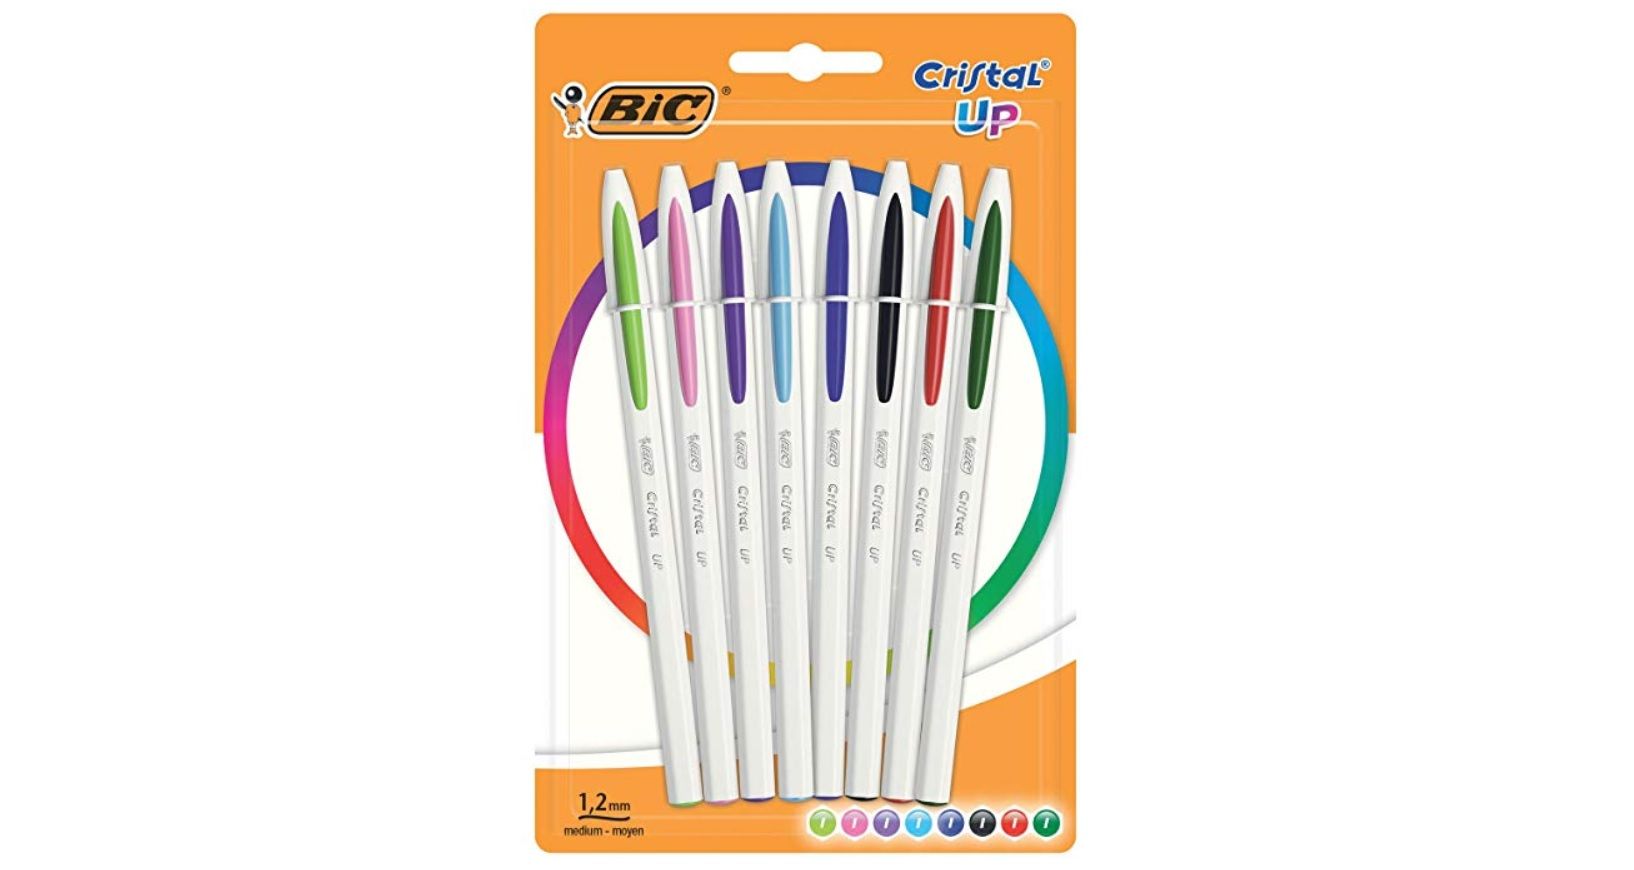 ¡Chollazo plus! Pack de 8 bolígrafos Bic Cristal Up Blister por sólo 1,87€ (antes 4,95€)